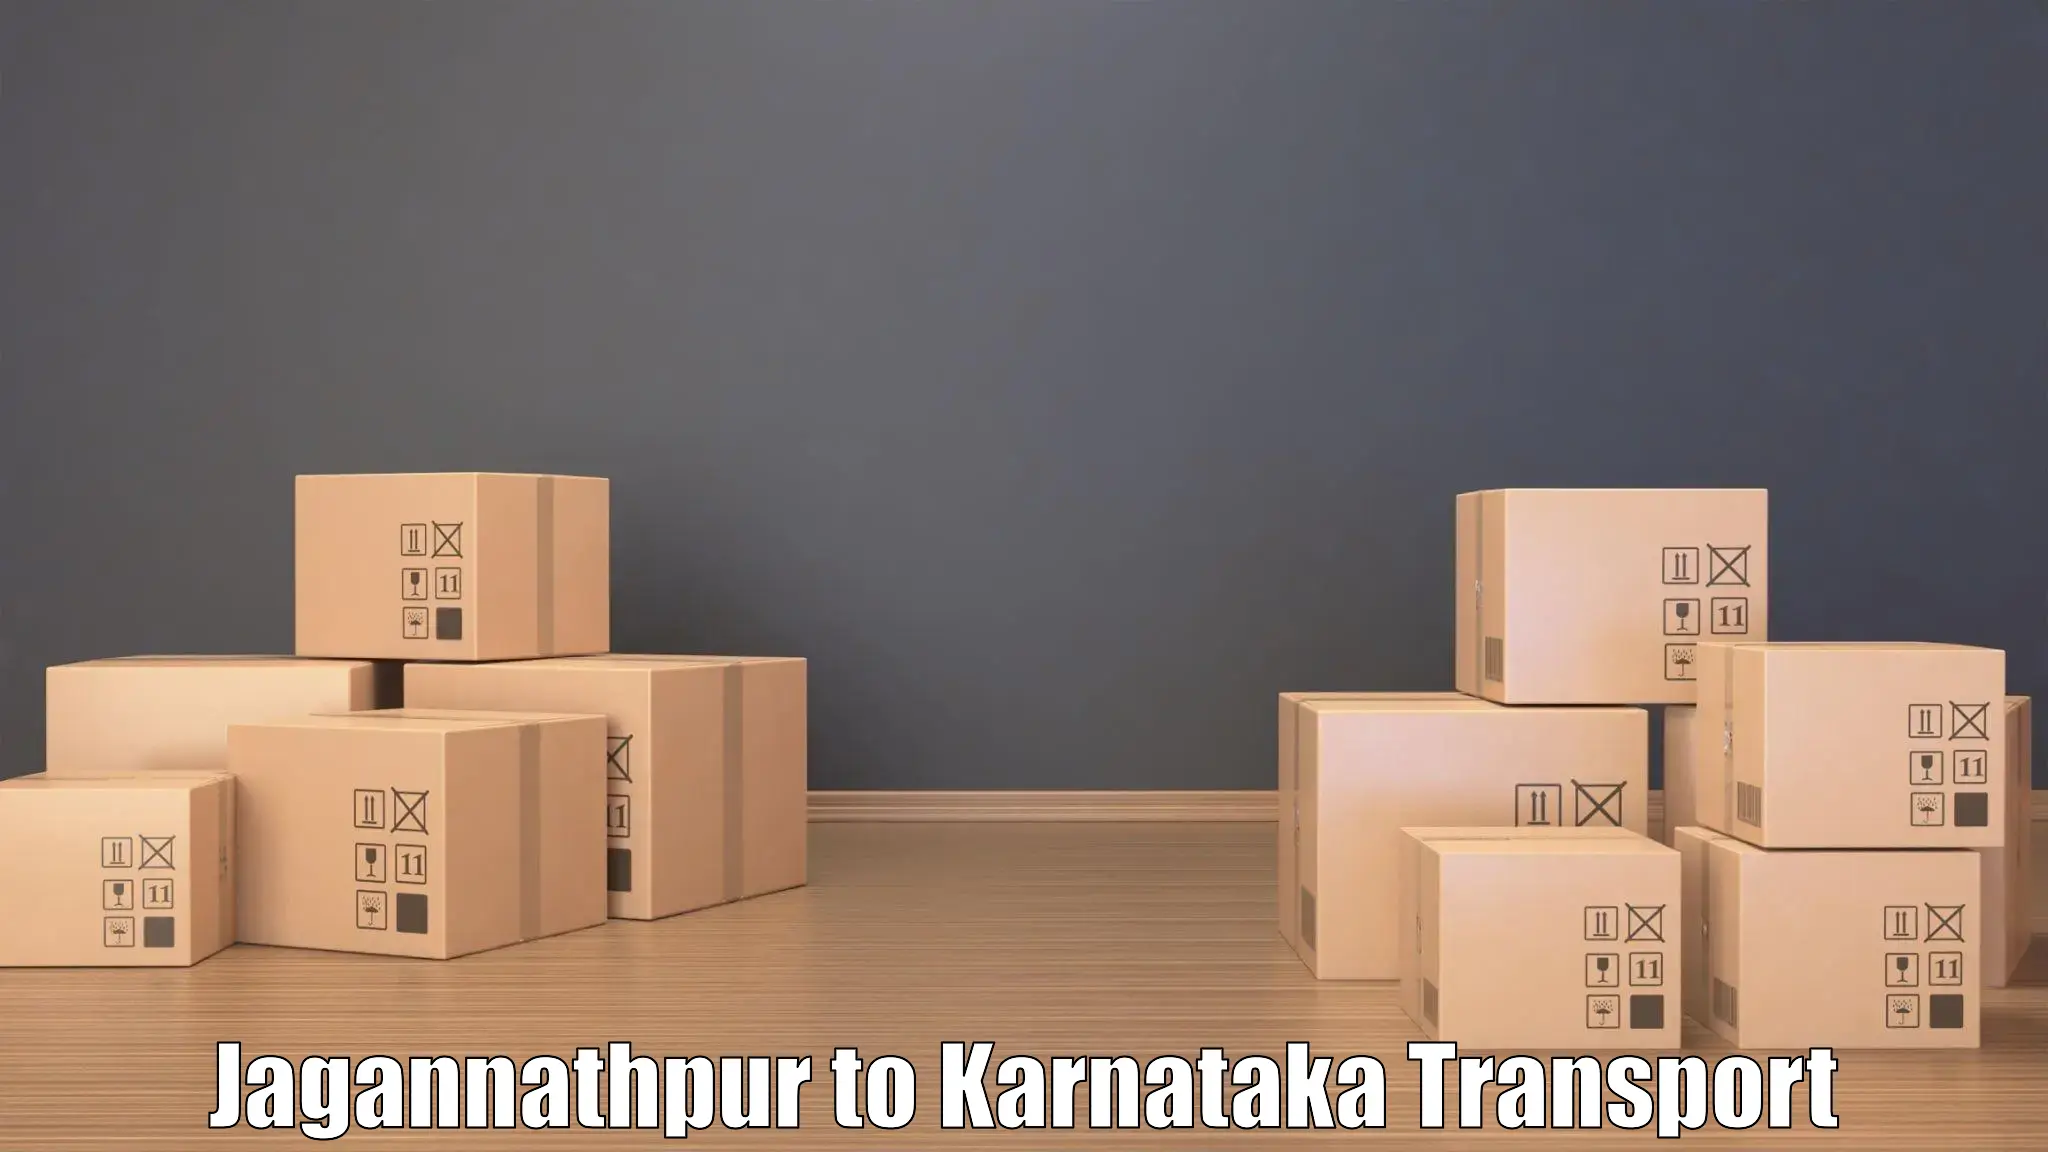 Shipping partner Jagannathpur to Thirthahalli